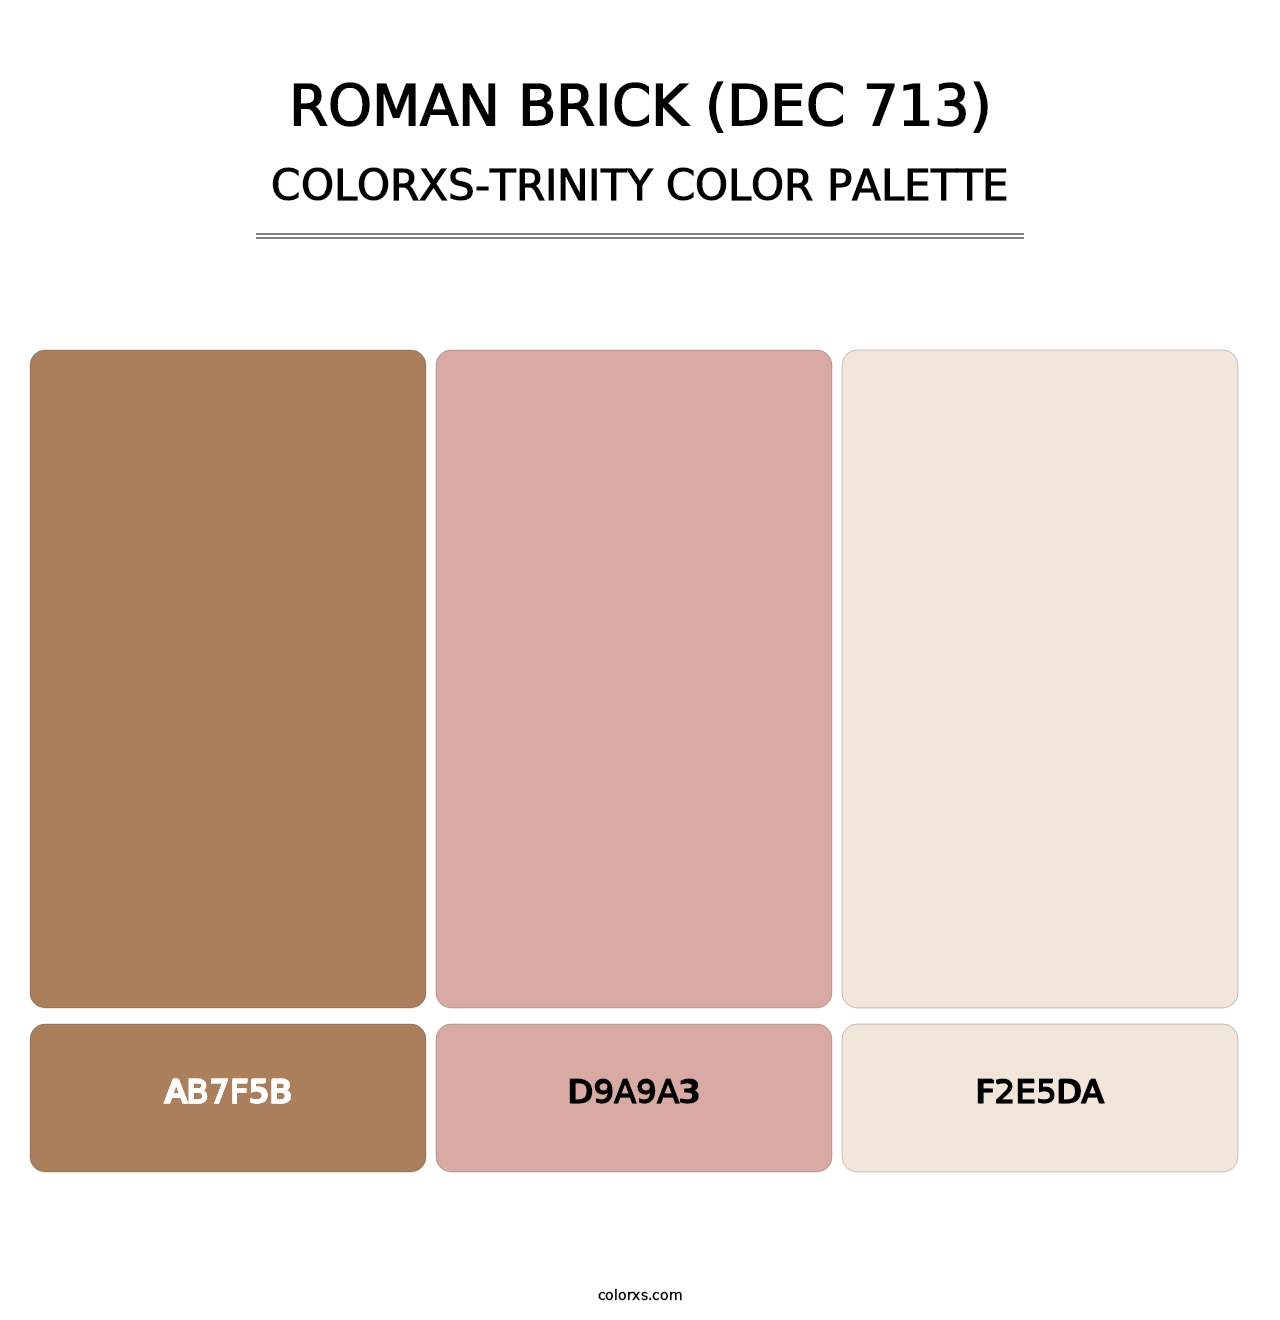 Roman Brick (DEC 713) - Colorxs Trinity Palette